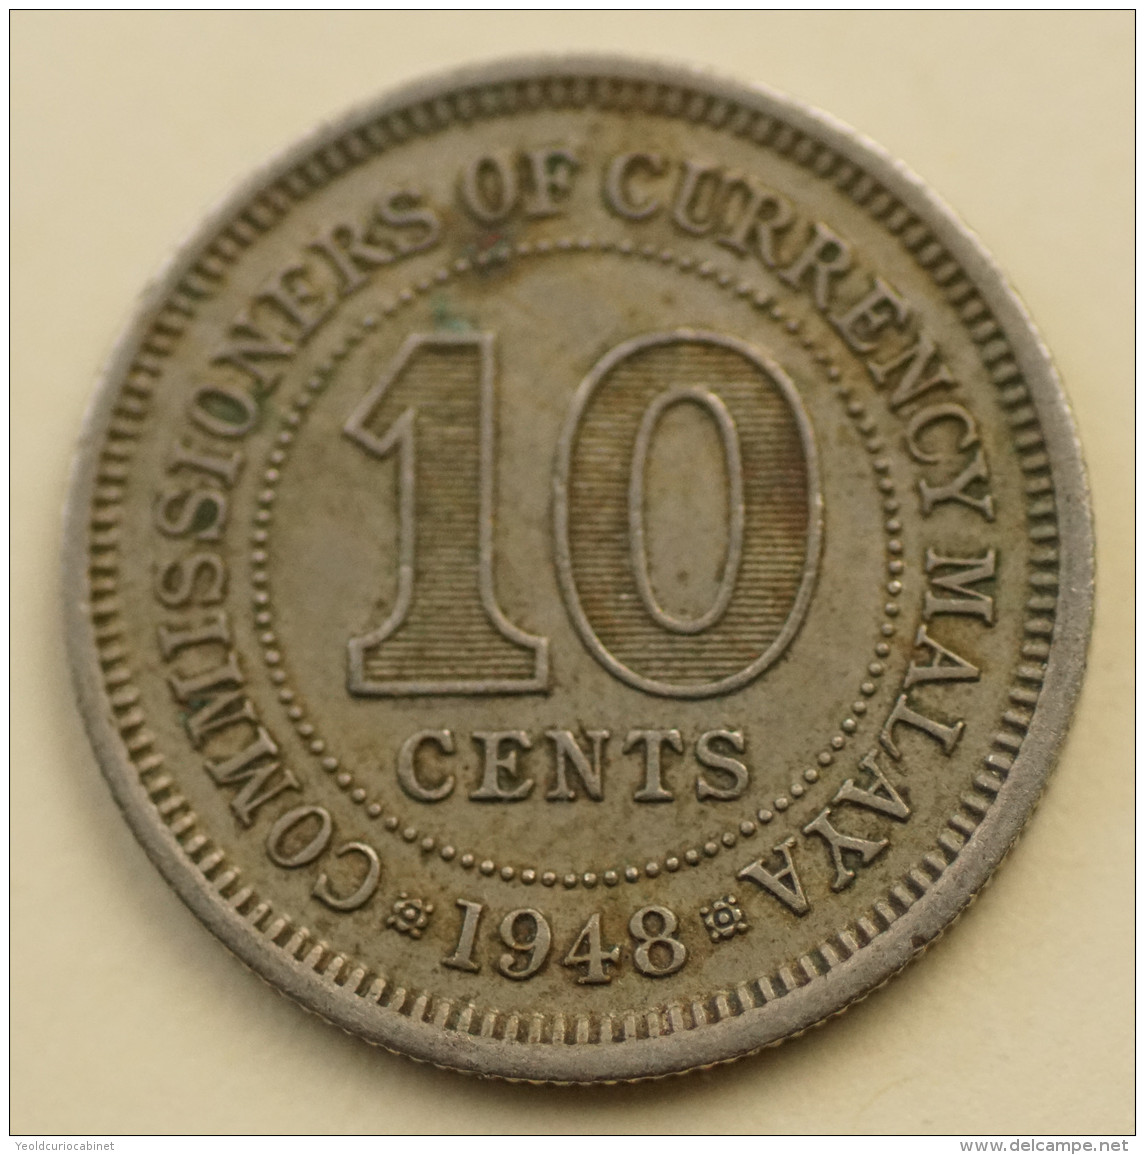 Malaya - 10 Cents - 1948 - George VI - Very Fine - Malaysia